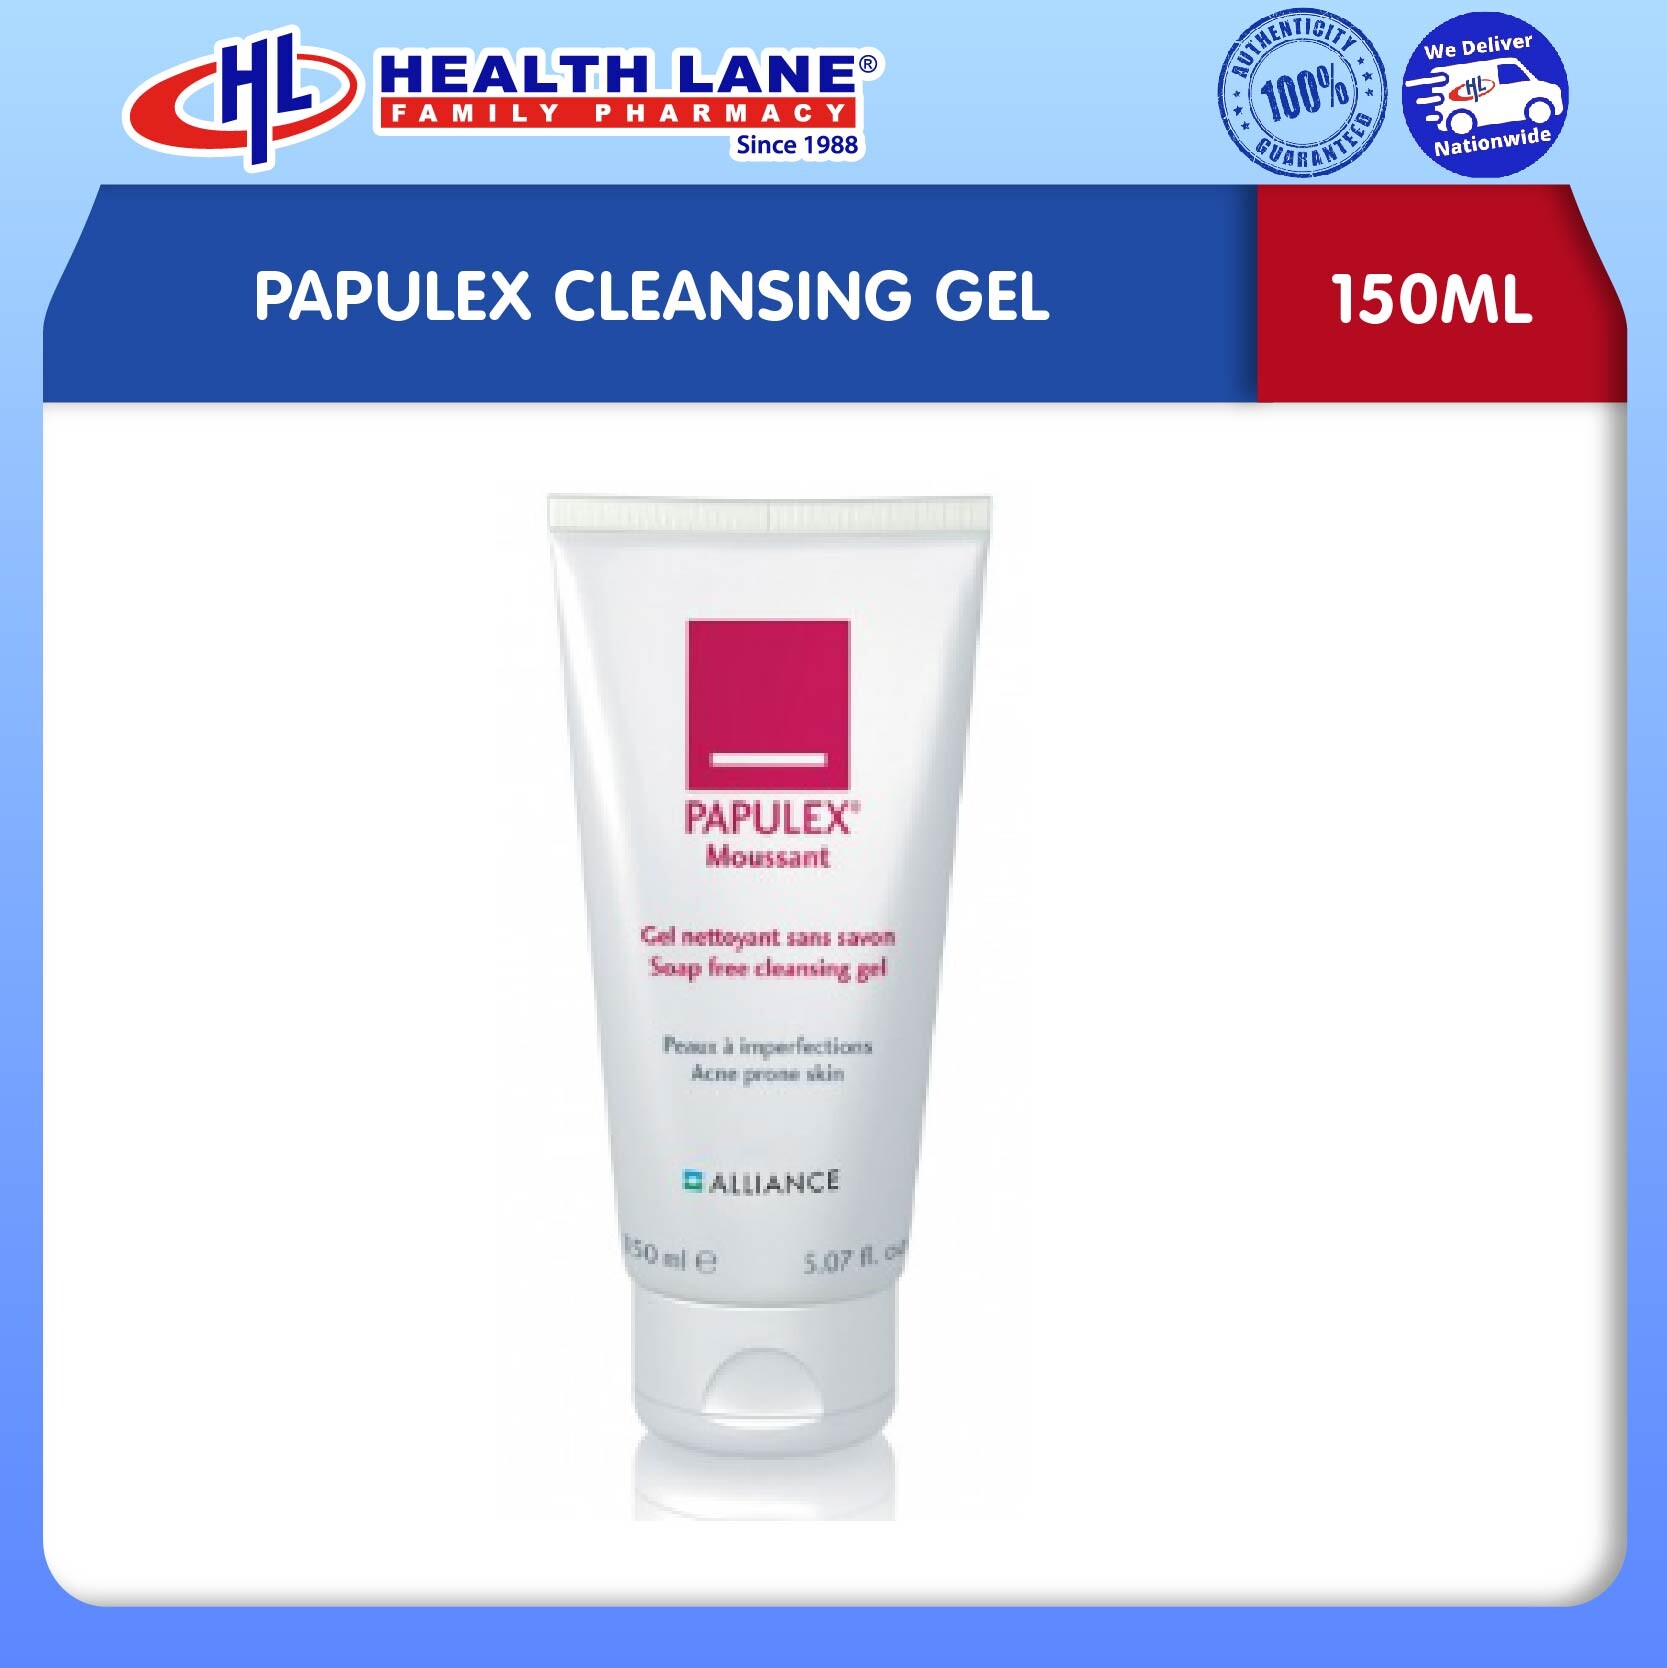 PAPULEX CLEANSING GEL (150ML)